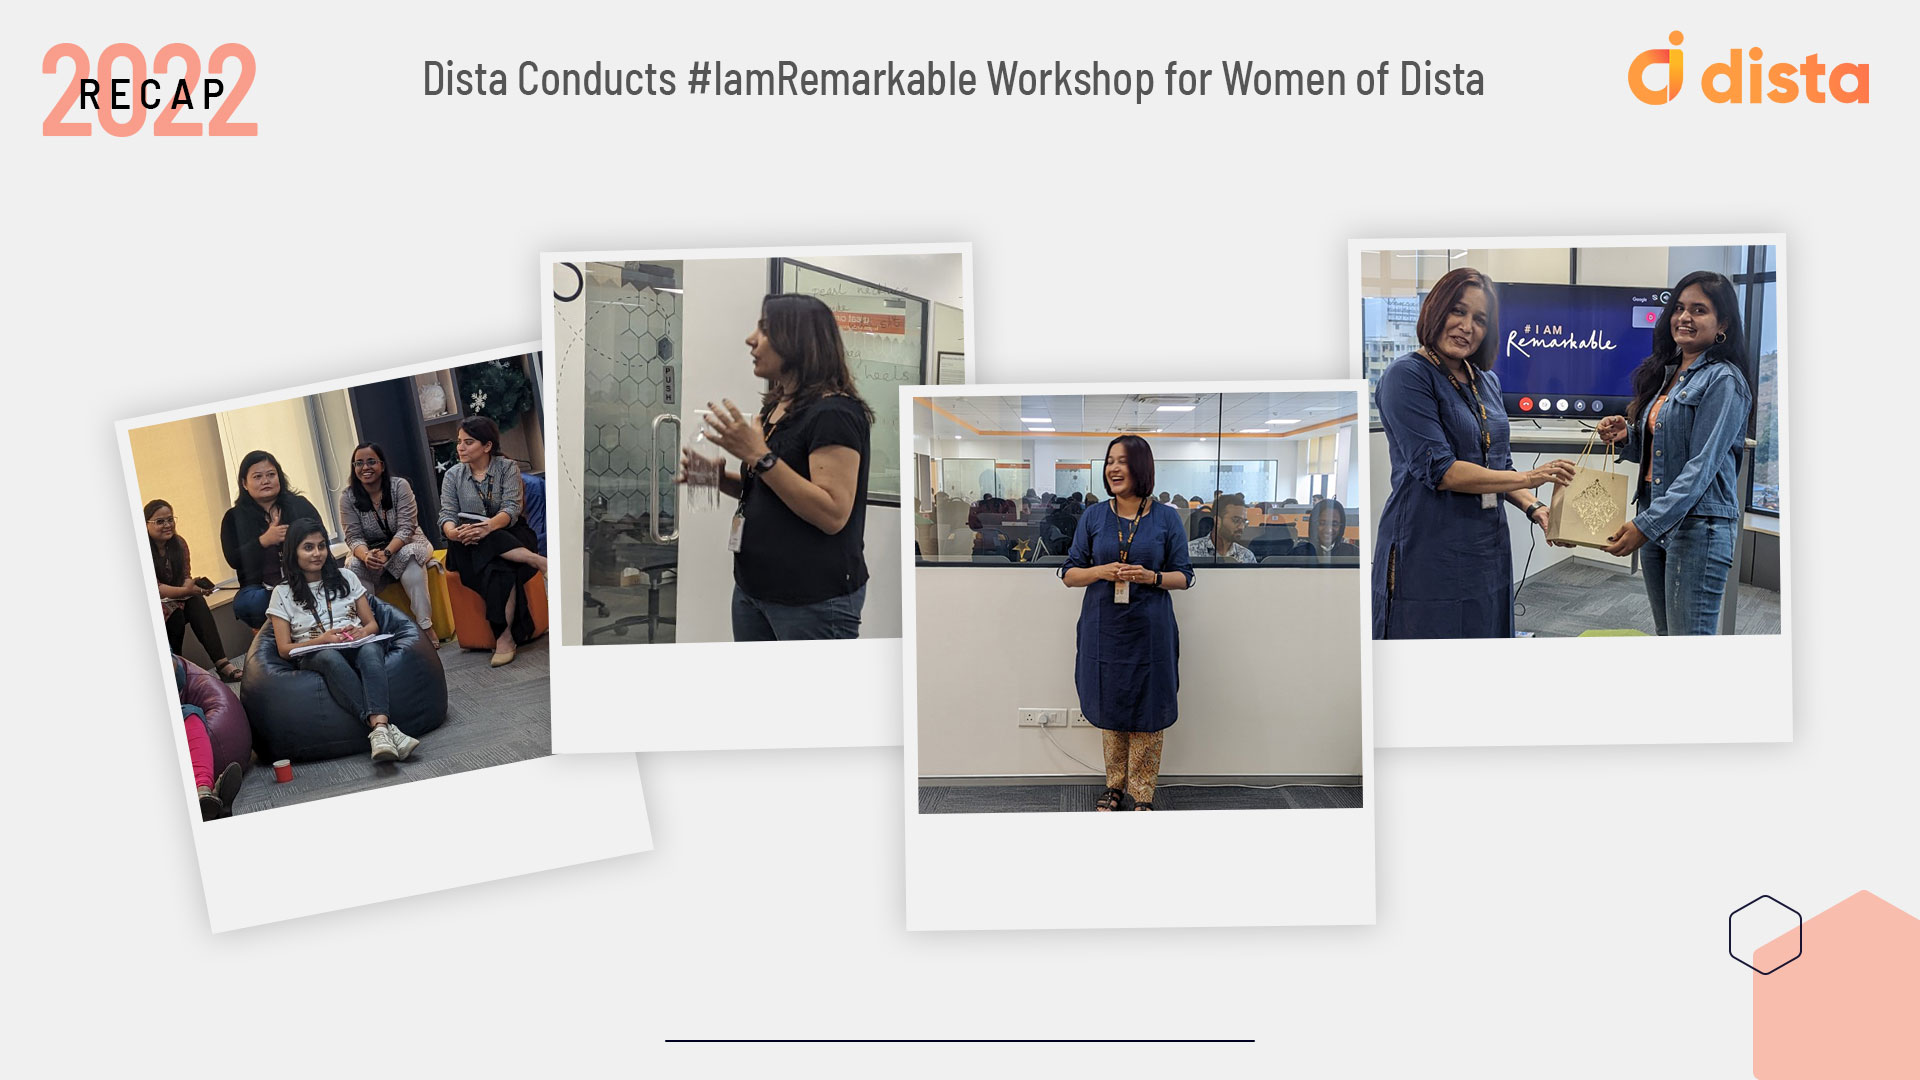 Dista Conducts #IamRemarkable Workshop for Women of Dista